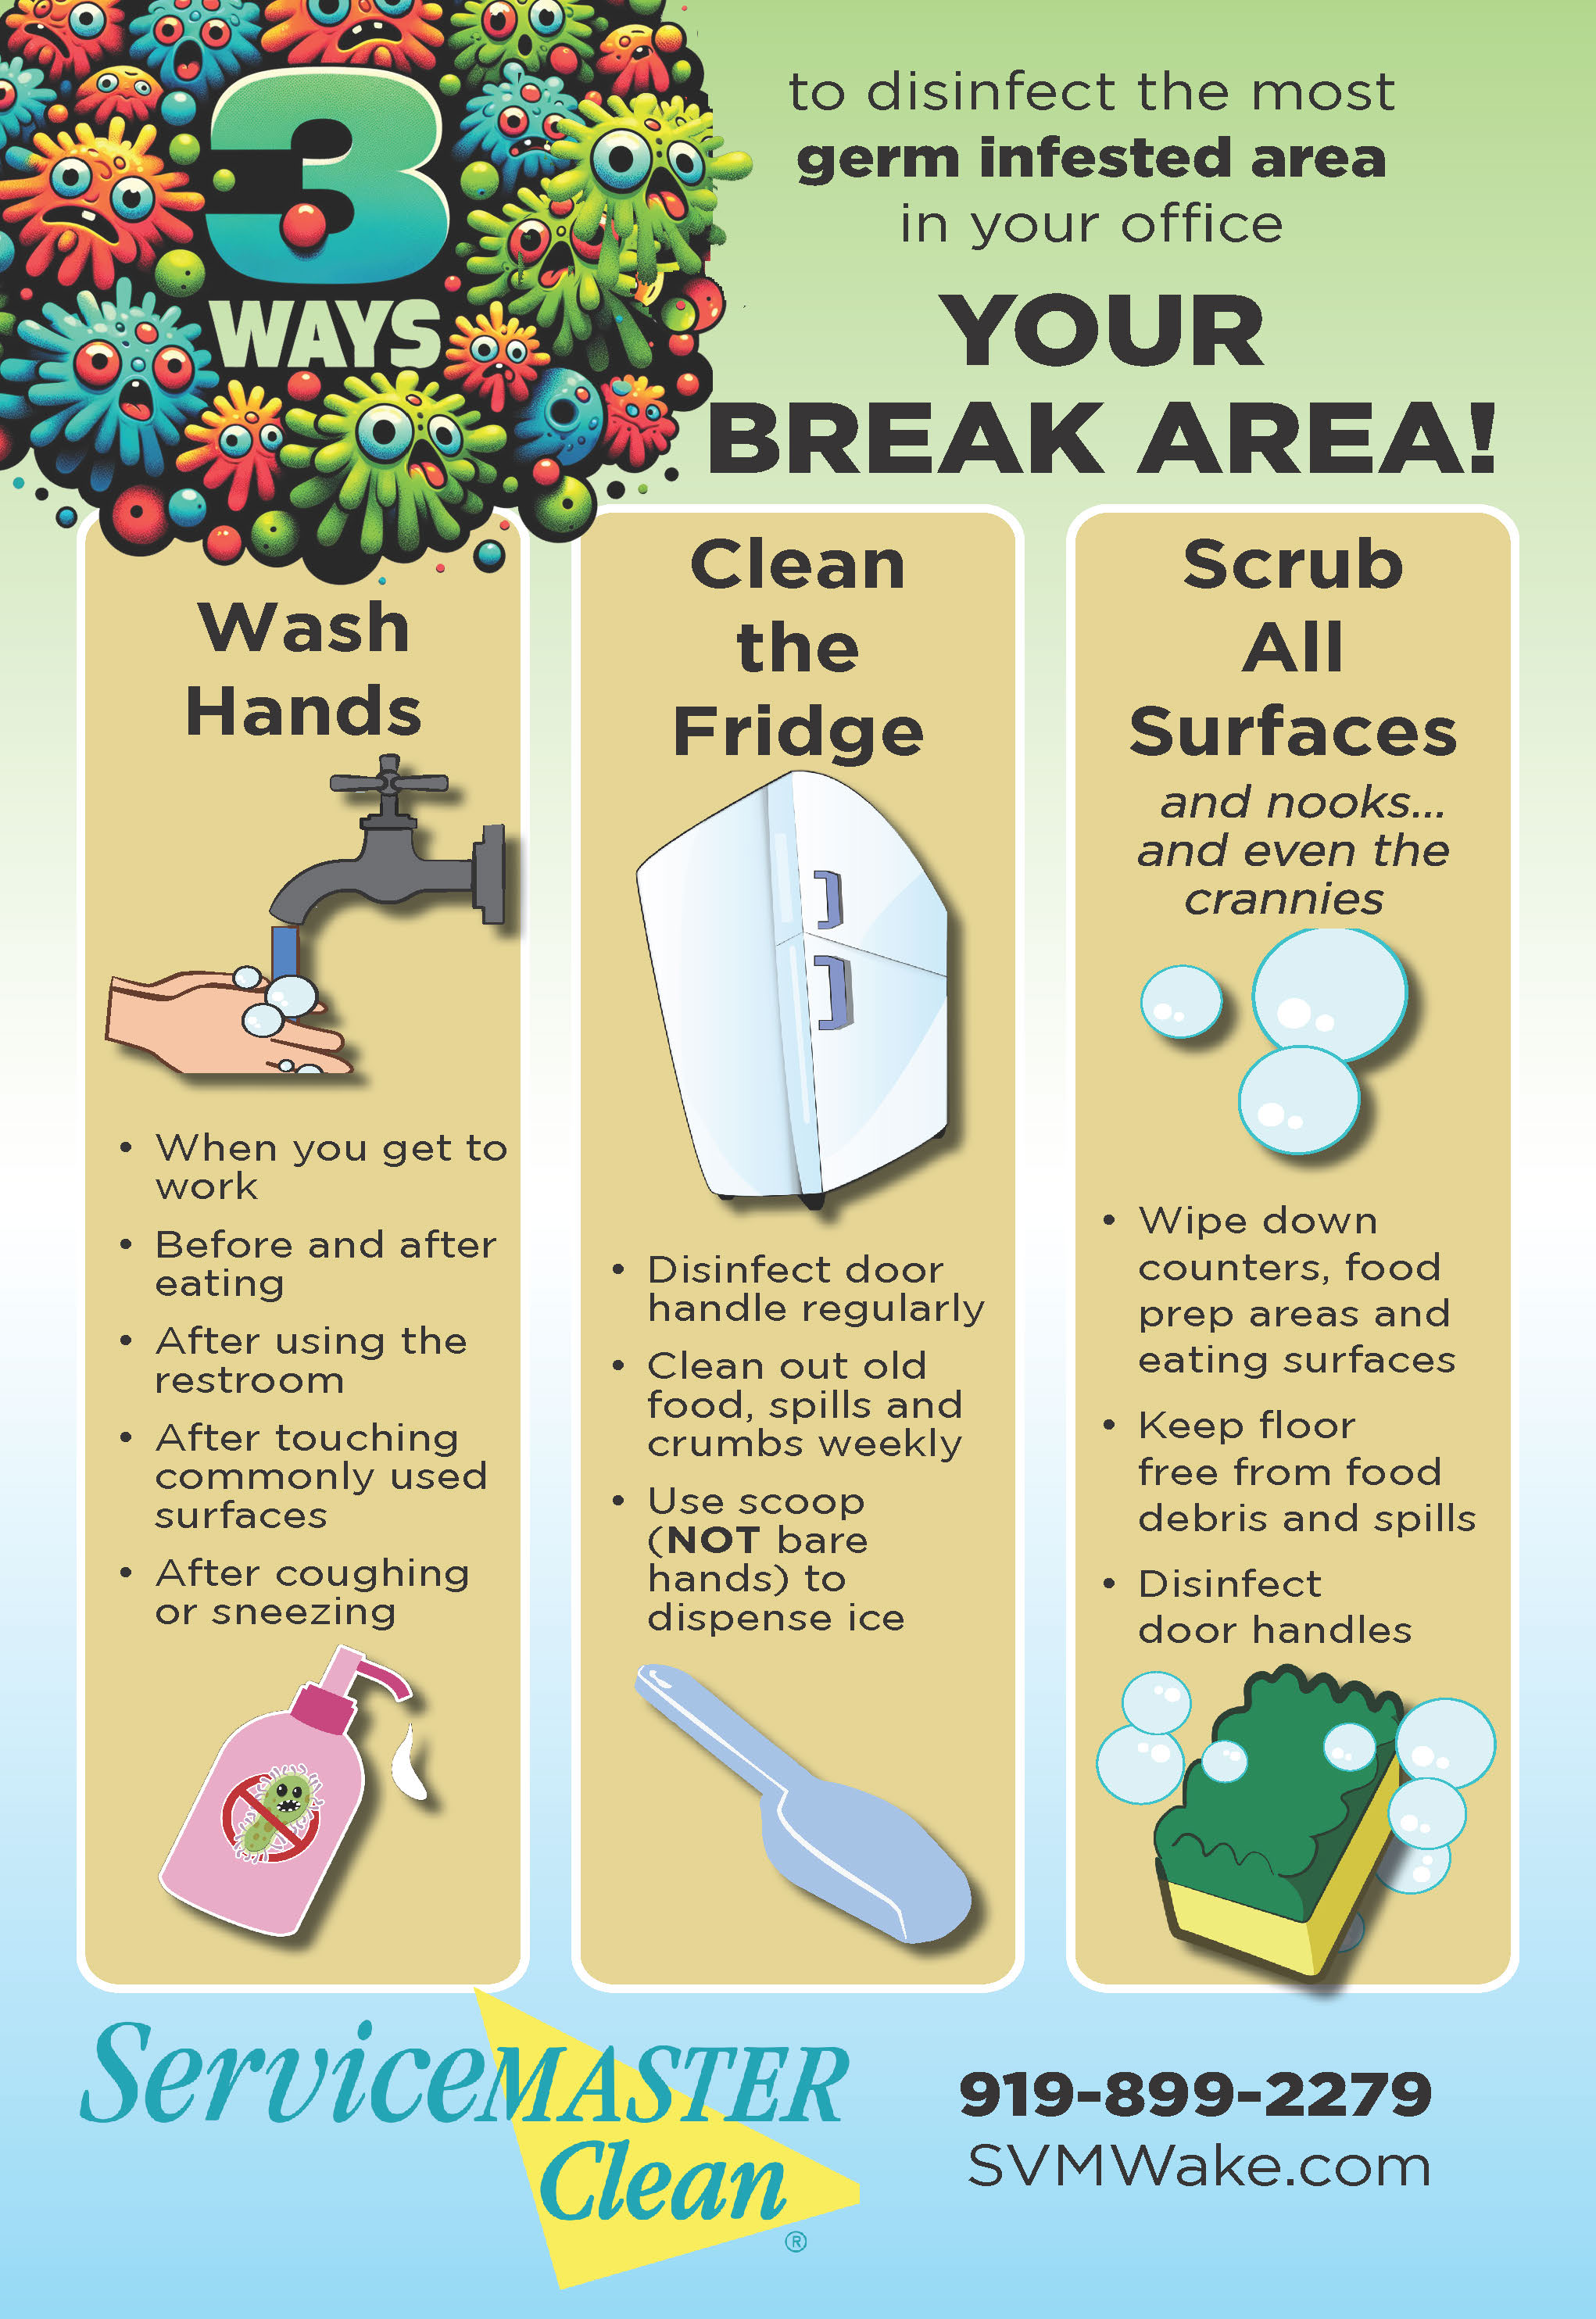 3 ways to disinfect break area infographic